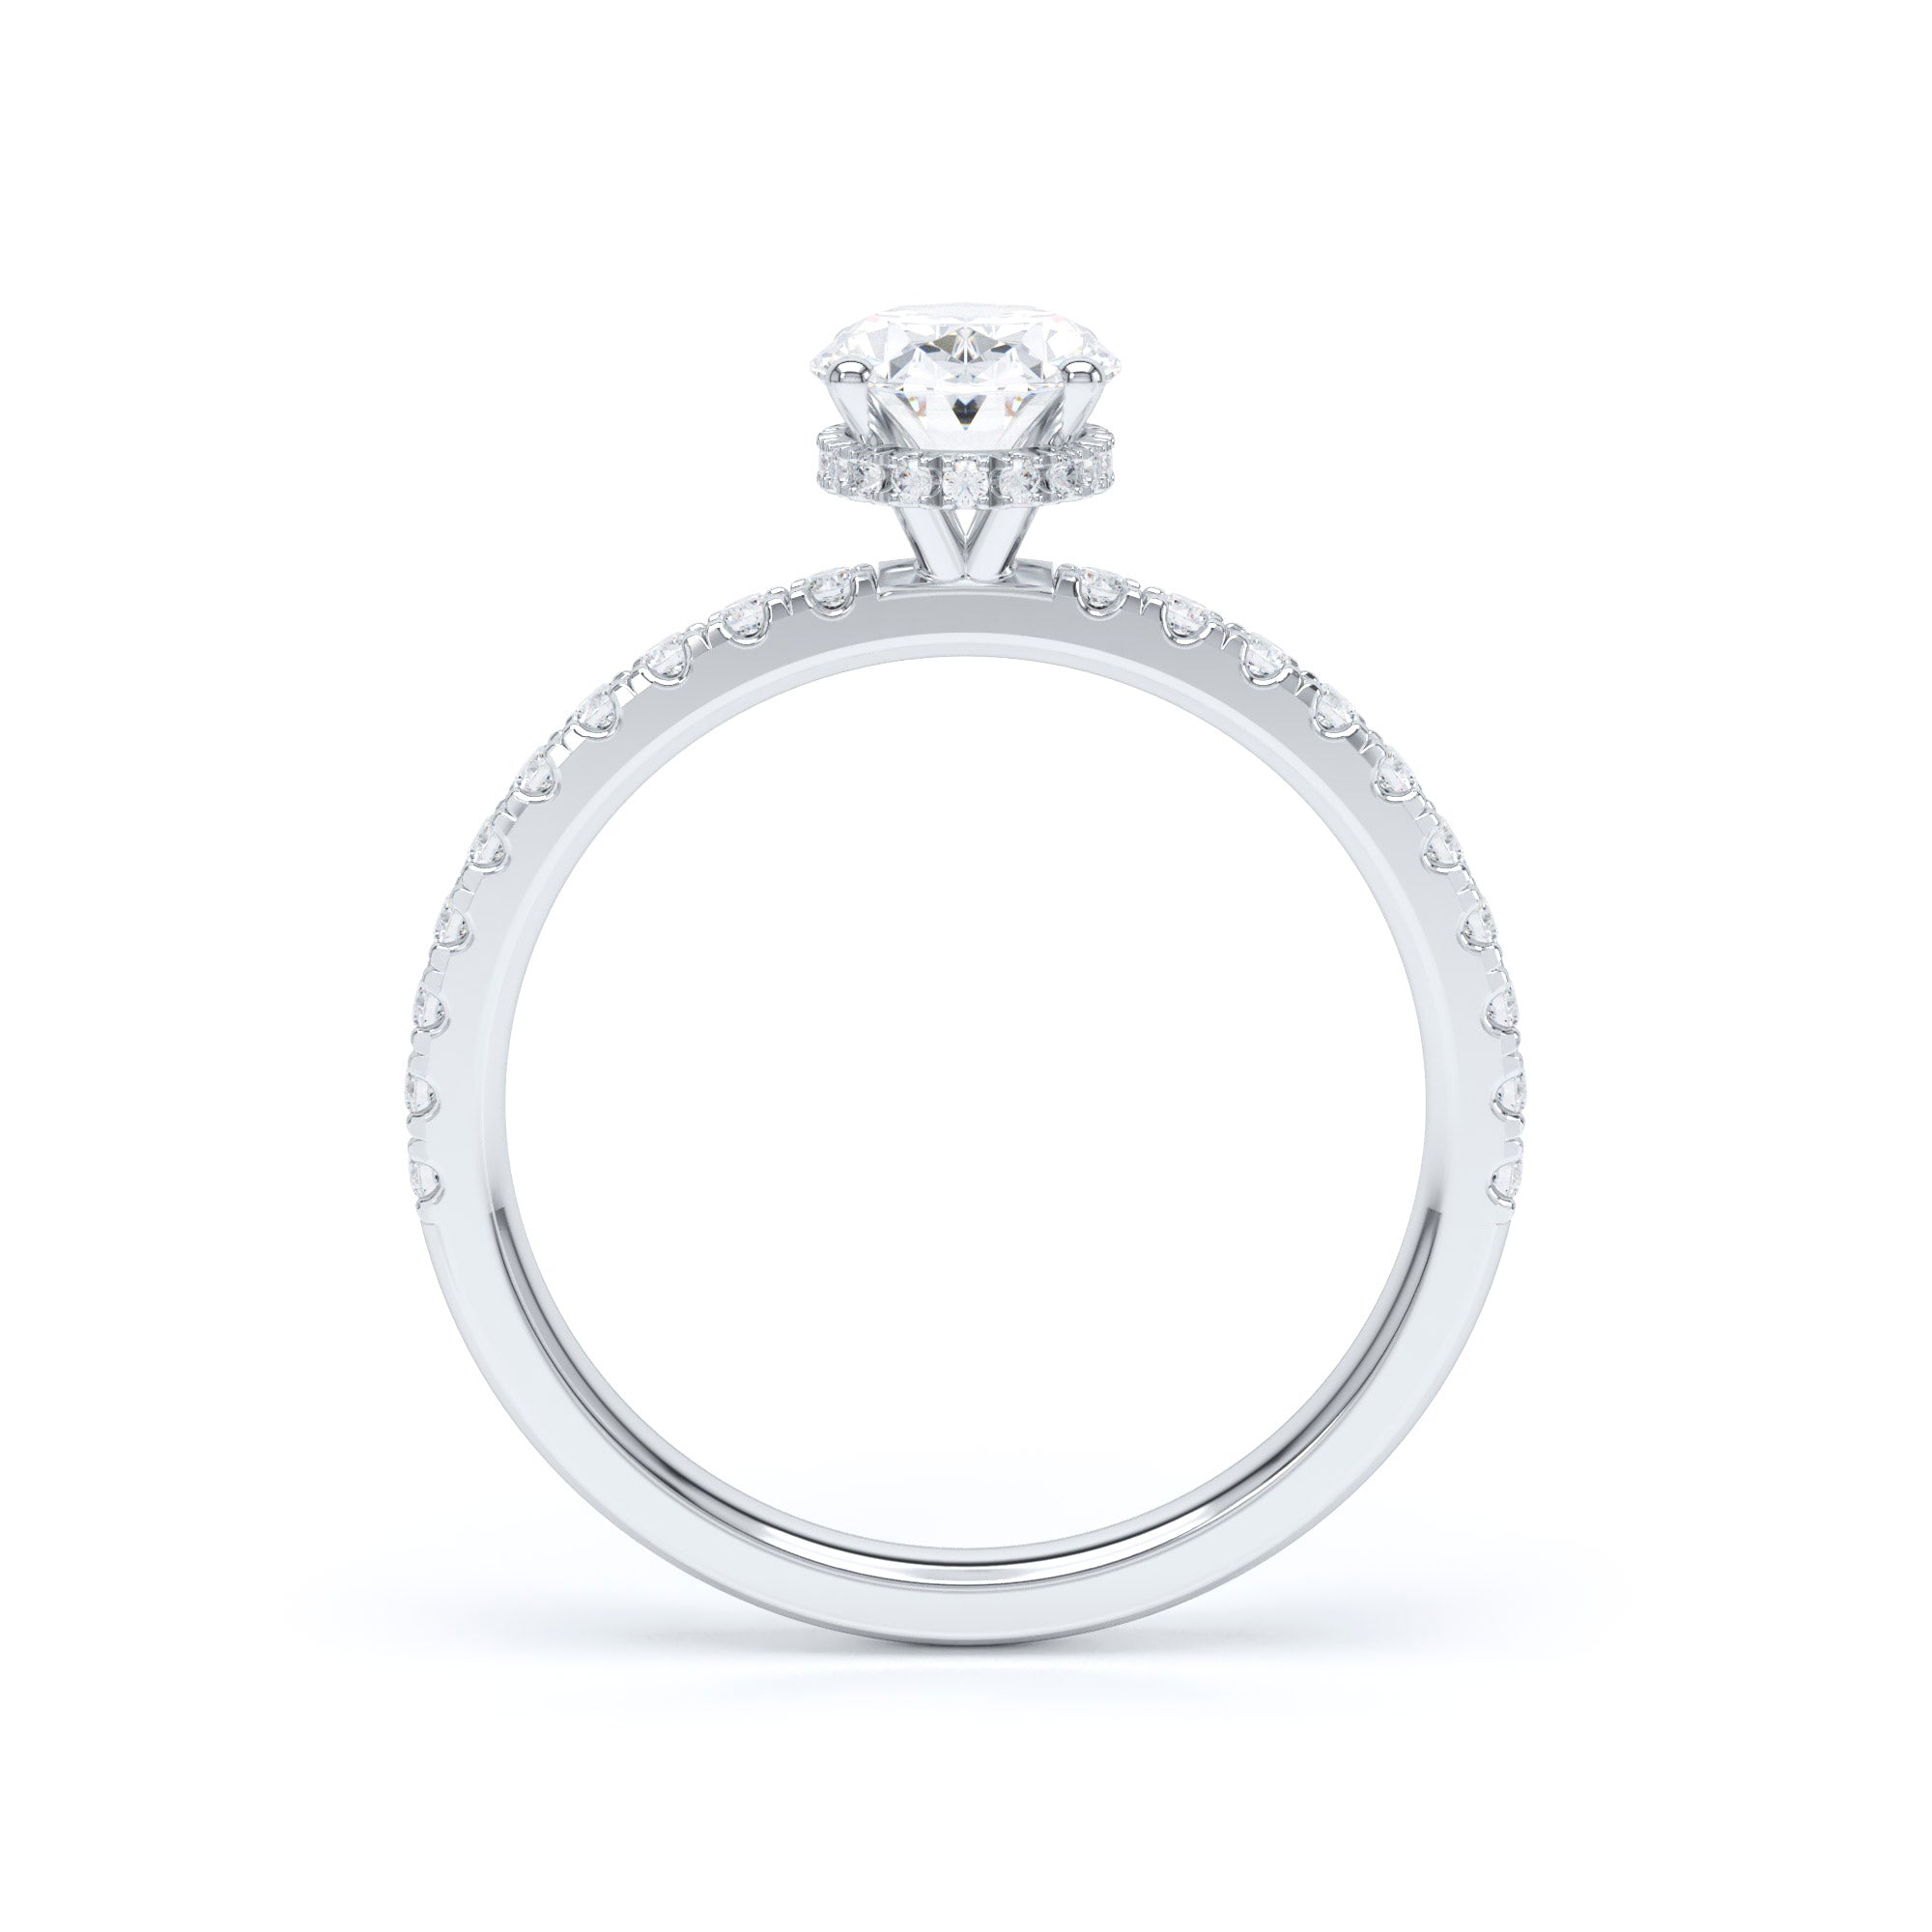 Paige Diamond Engagement Ring